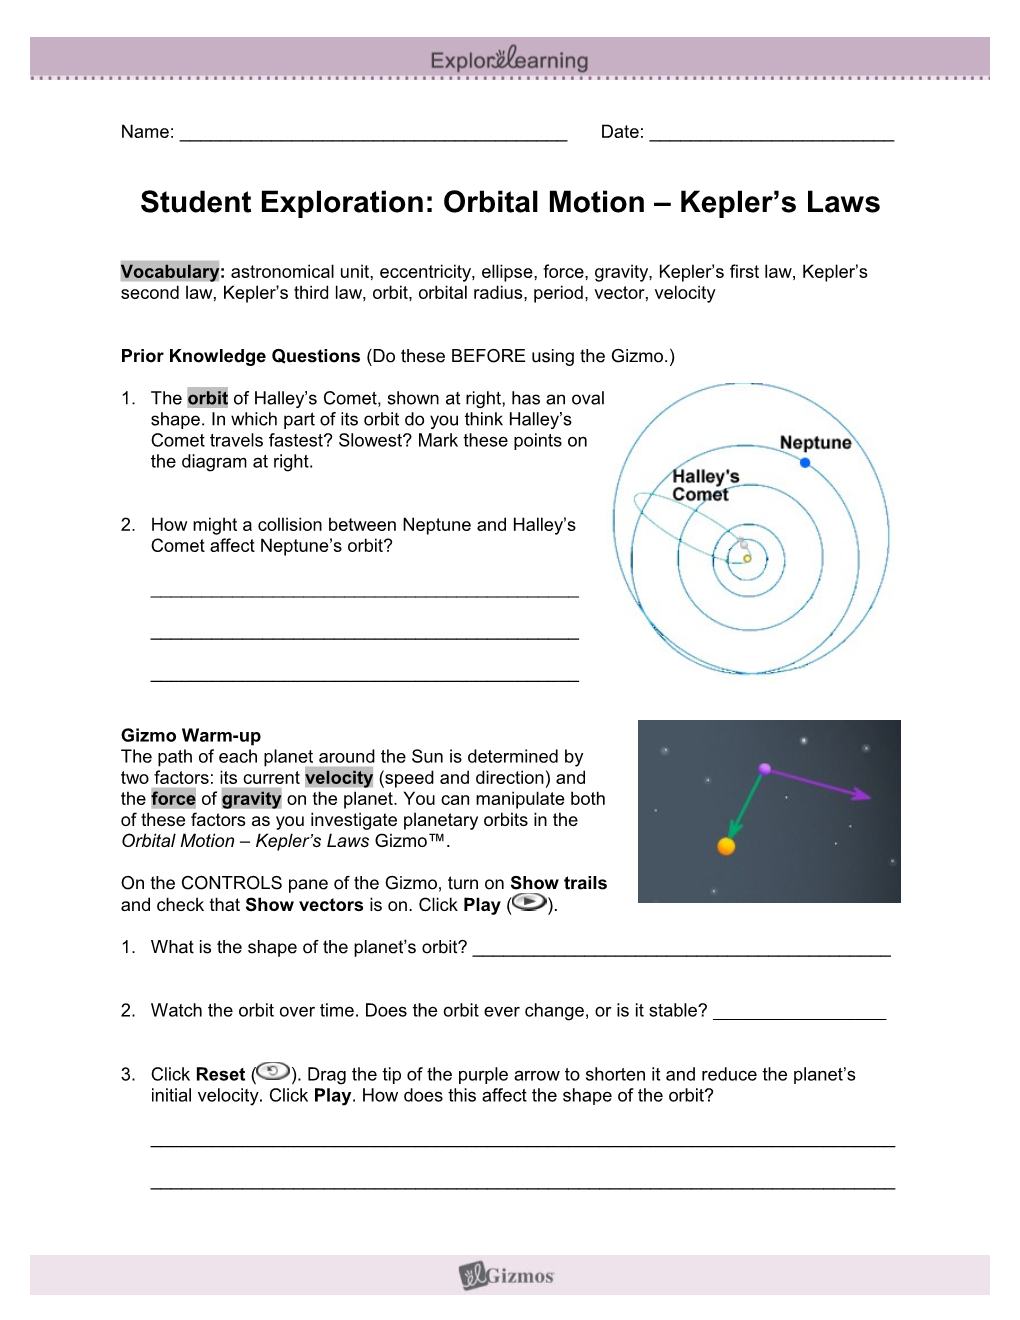 Orbital Motion Keplers Laws